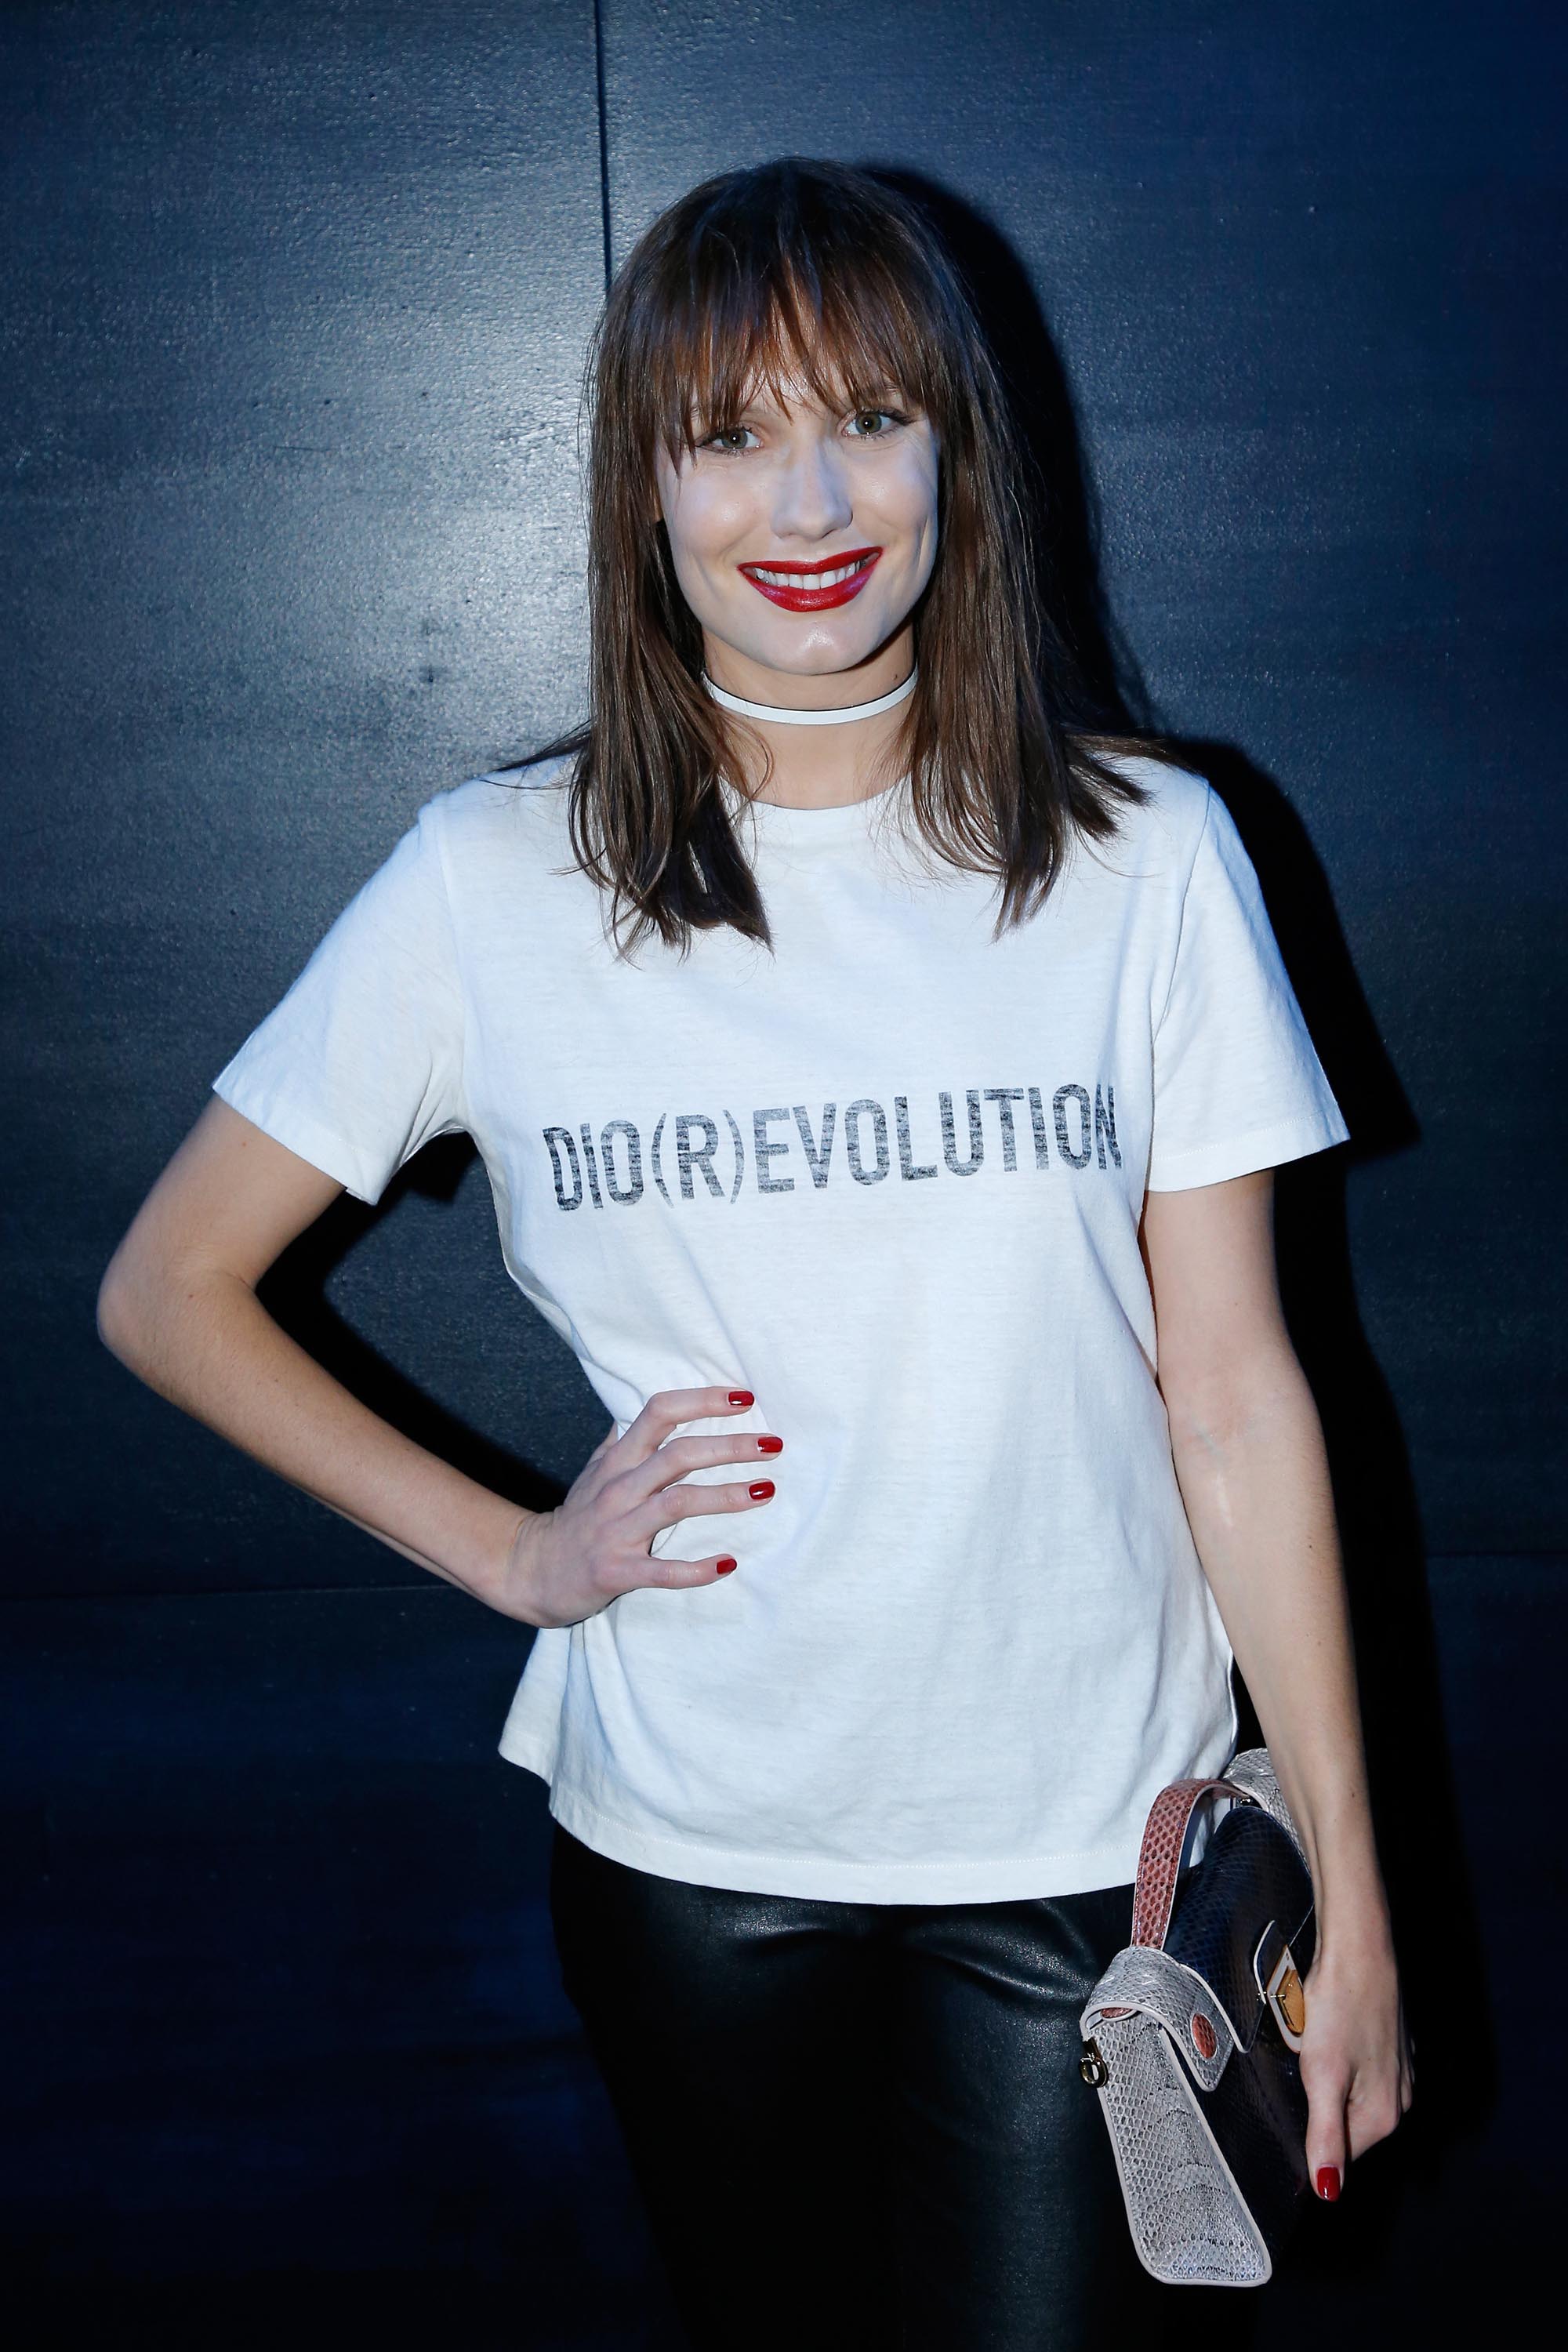 Ana Girardot attends the Christian Dior show